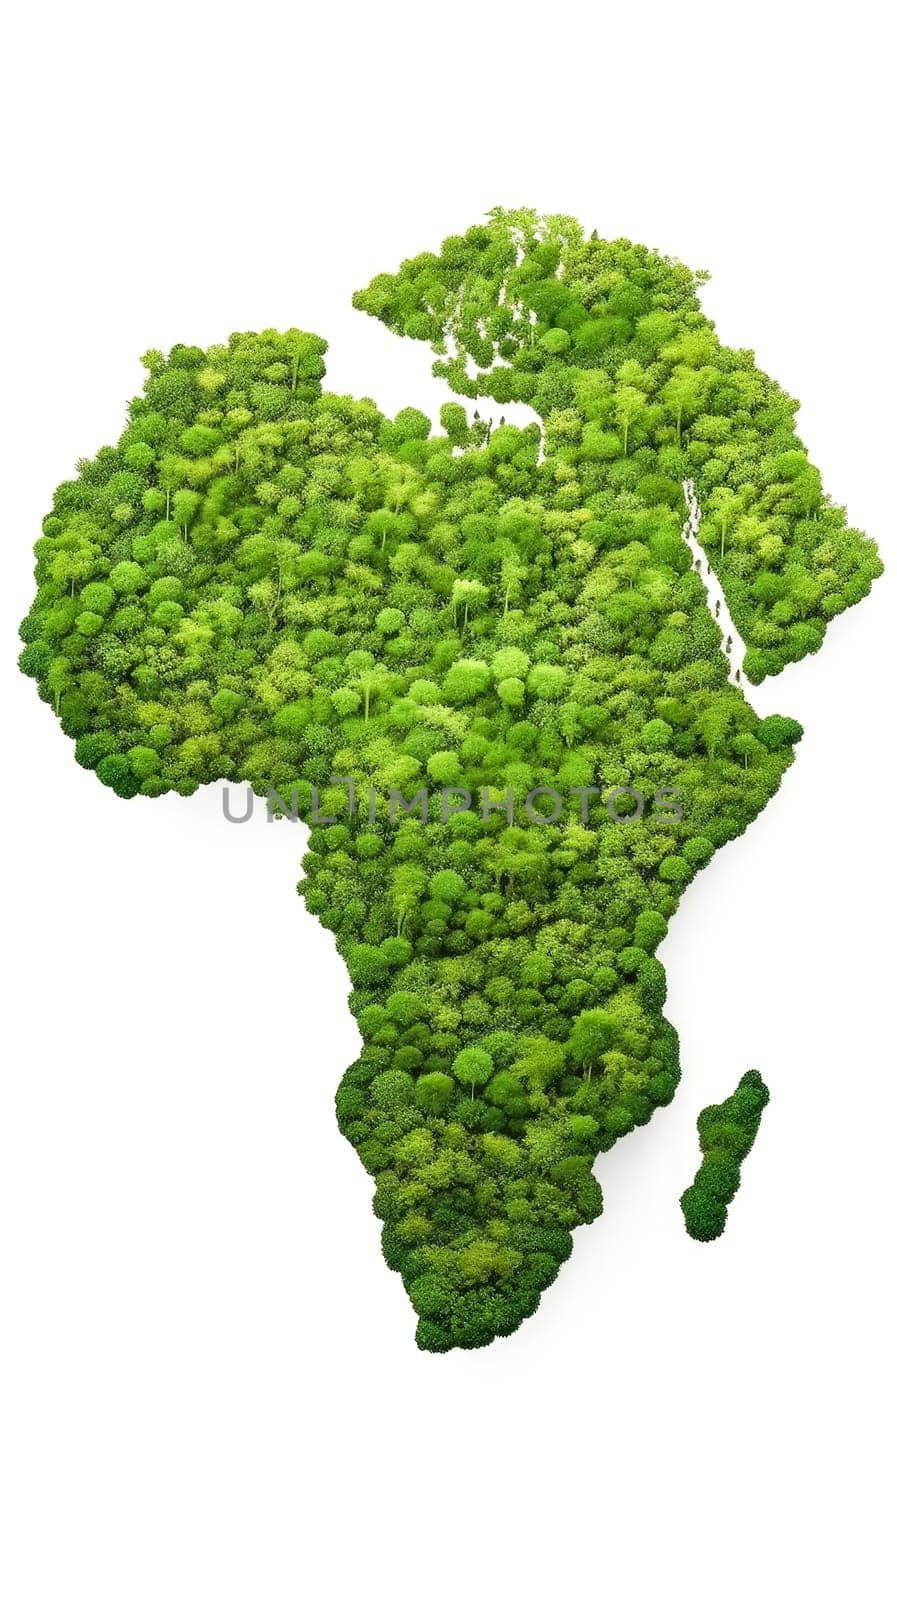 Indias green resolve, Tree shaped map by Alla_Morozova93